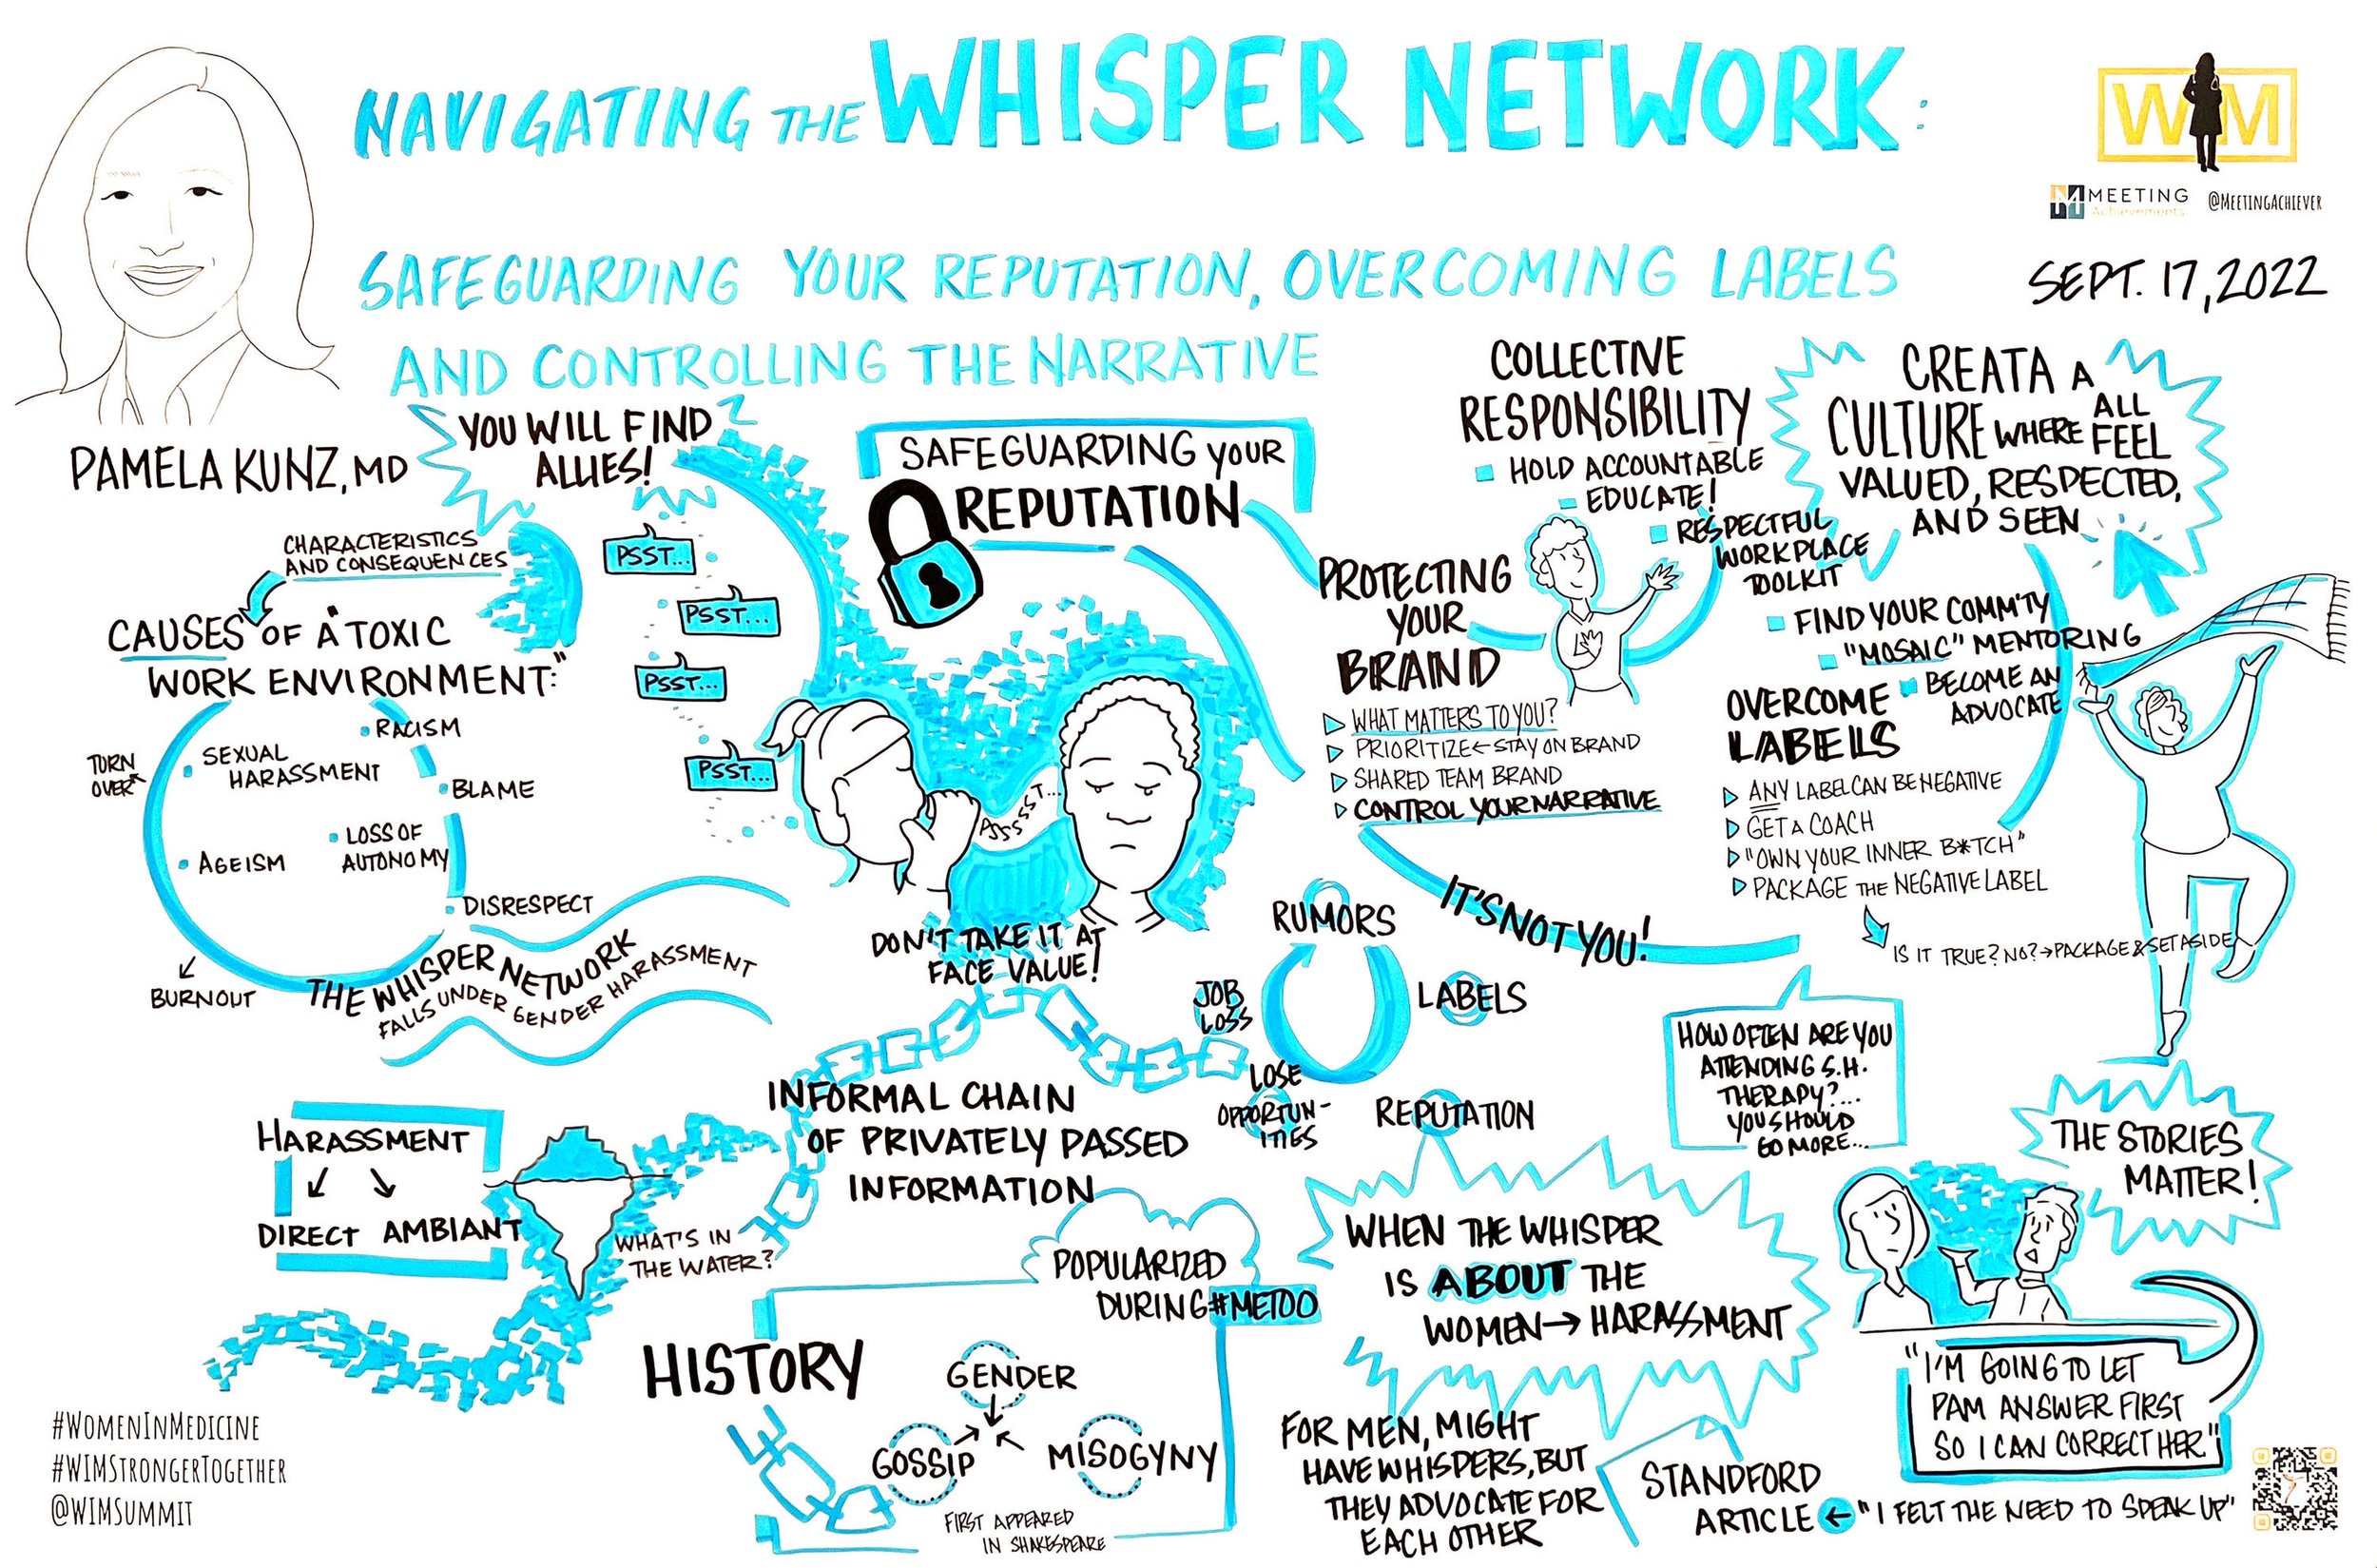 19_Meeting Achievements_WiM 2022_Navigating the Whisper Network_20220917.jpeg